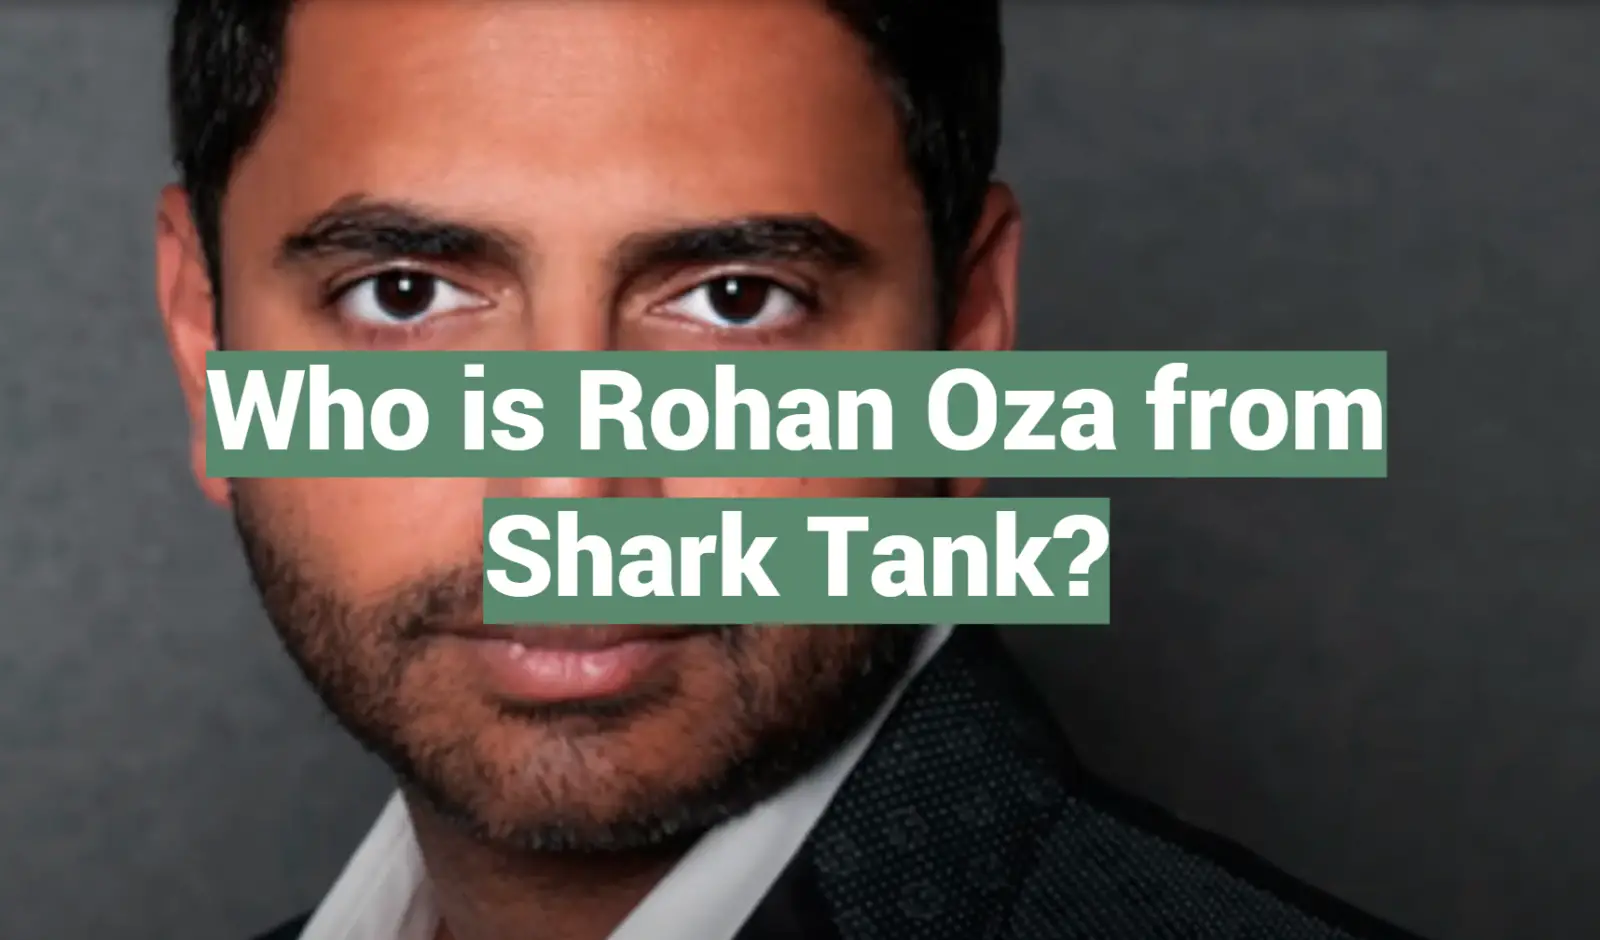 Who is Rohan Oza from Shark Tank?